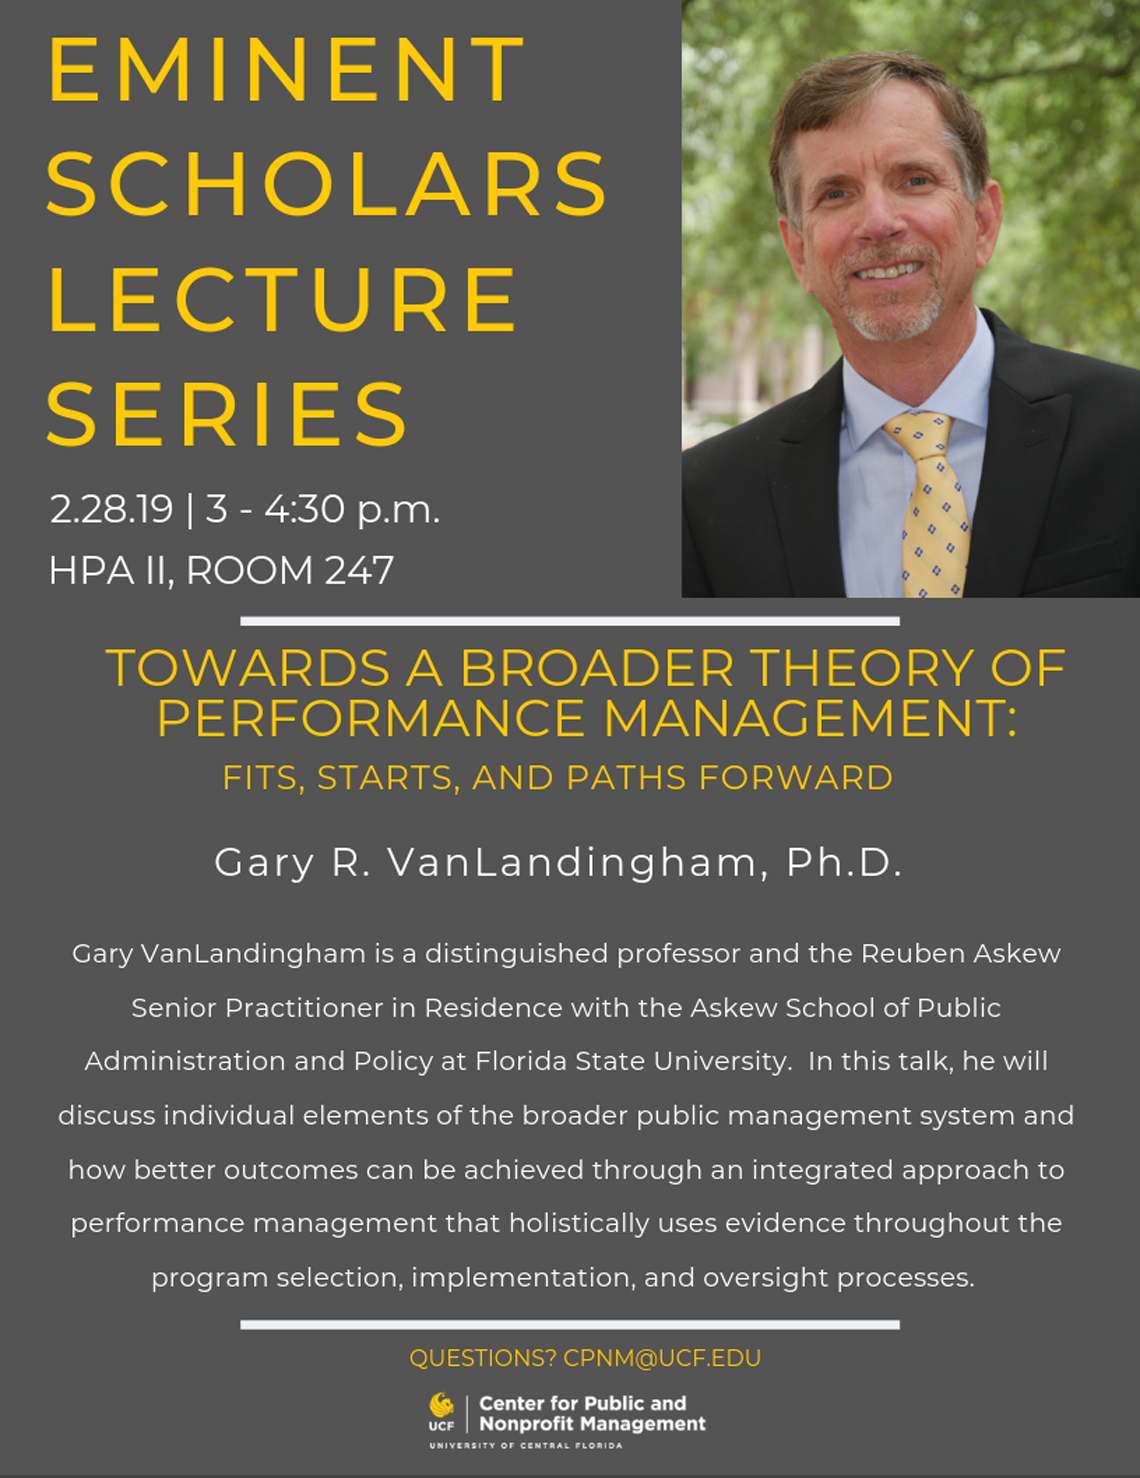 Gary R. VanLandingham, Ph.D. - 2.28.19 | 3-4:30pm, HPA II, Room 247